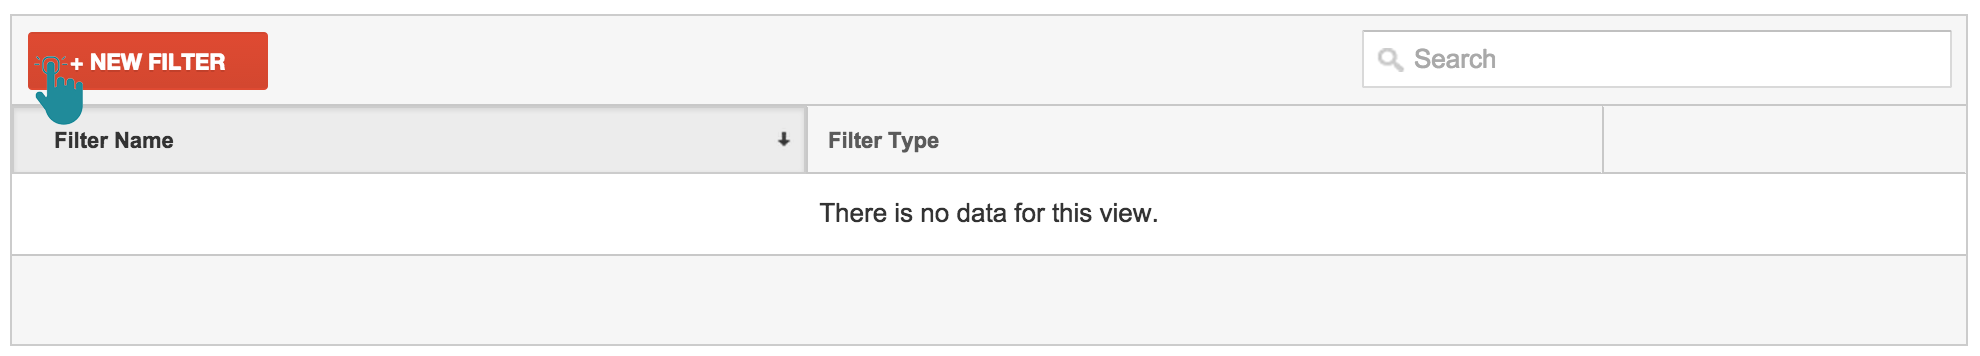 New Filter Google Analytics